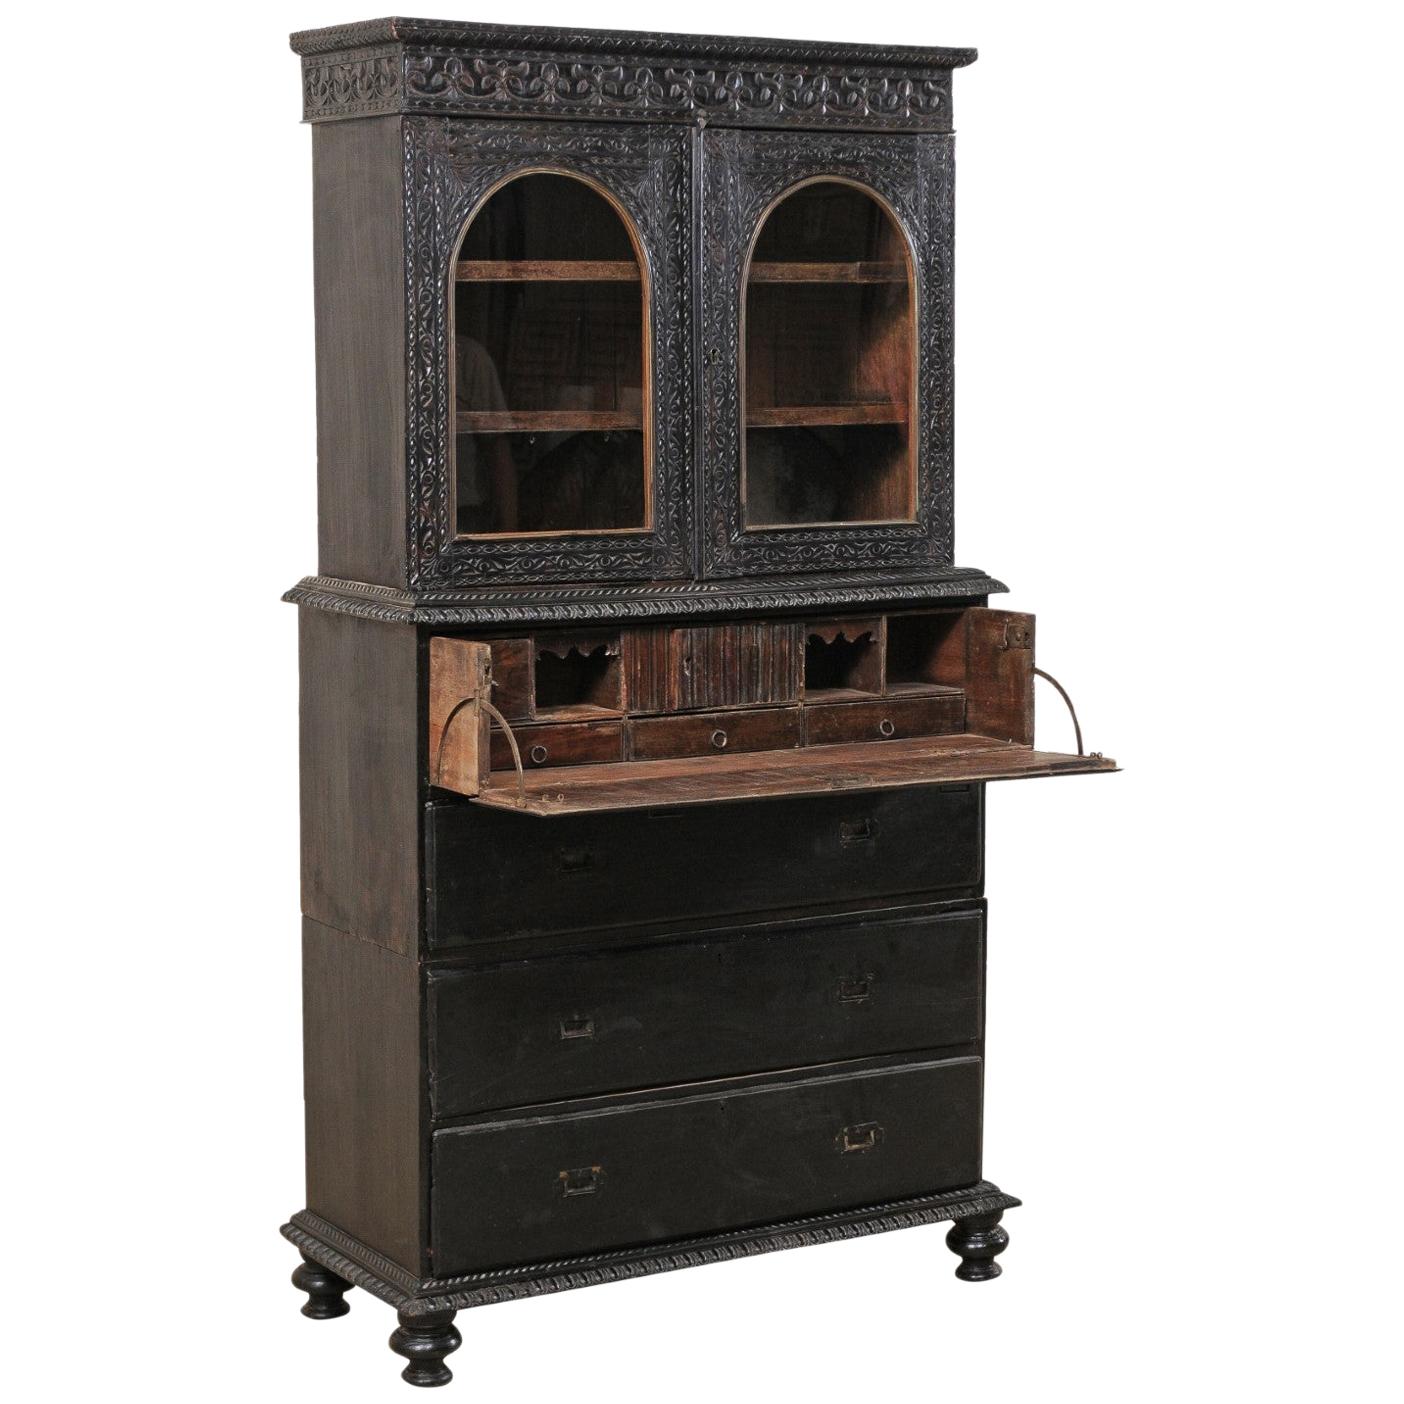 Fabulous Antique British Colonial Butler's Desk 'With Secret Compartments'